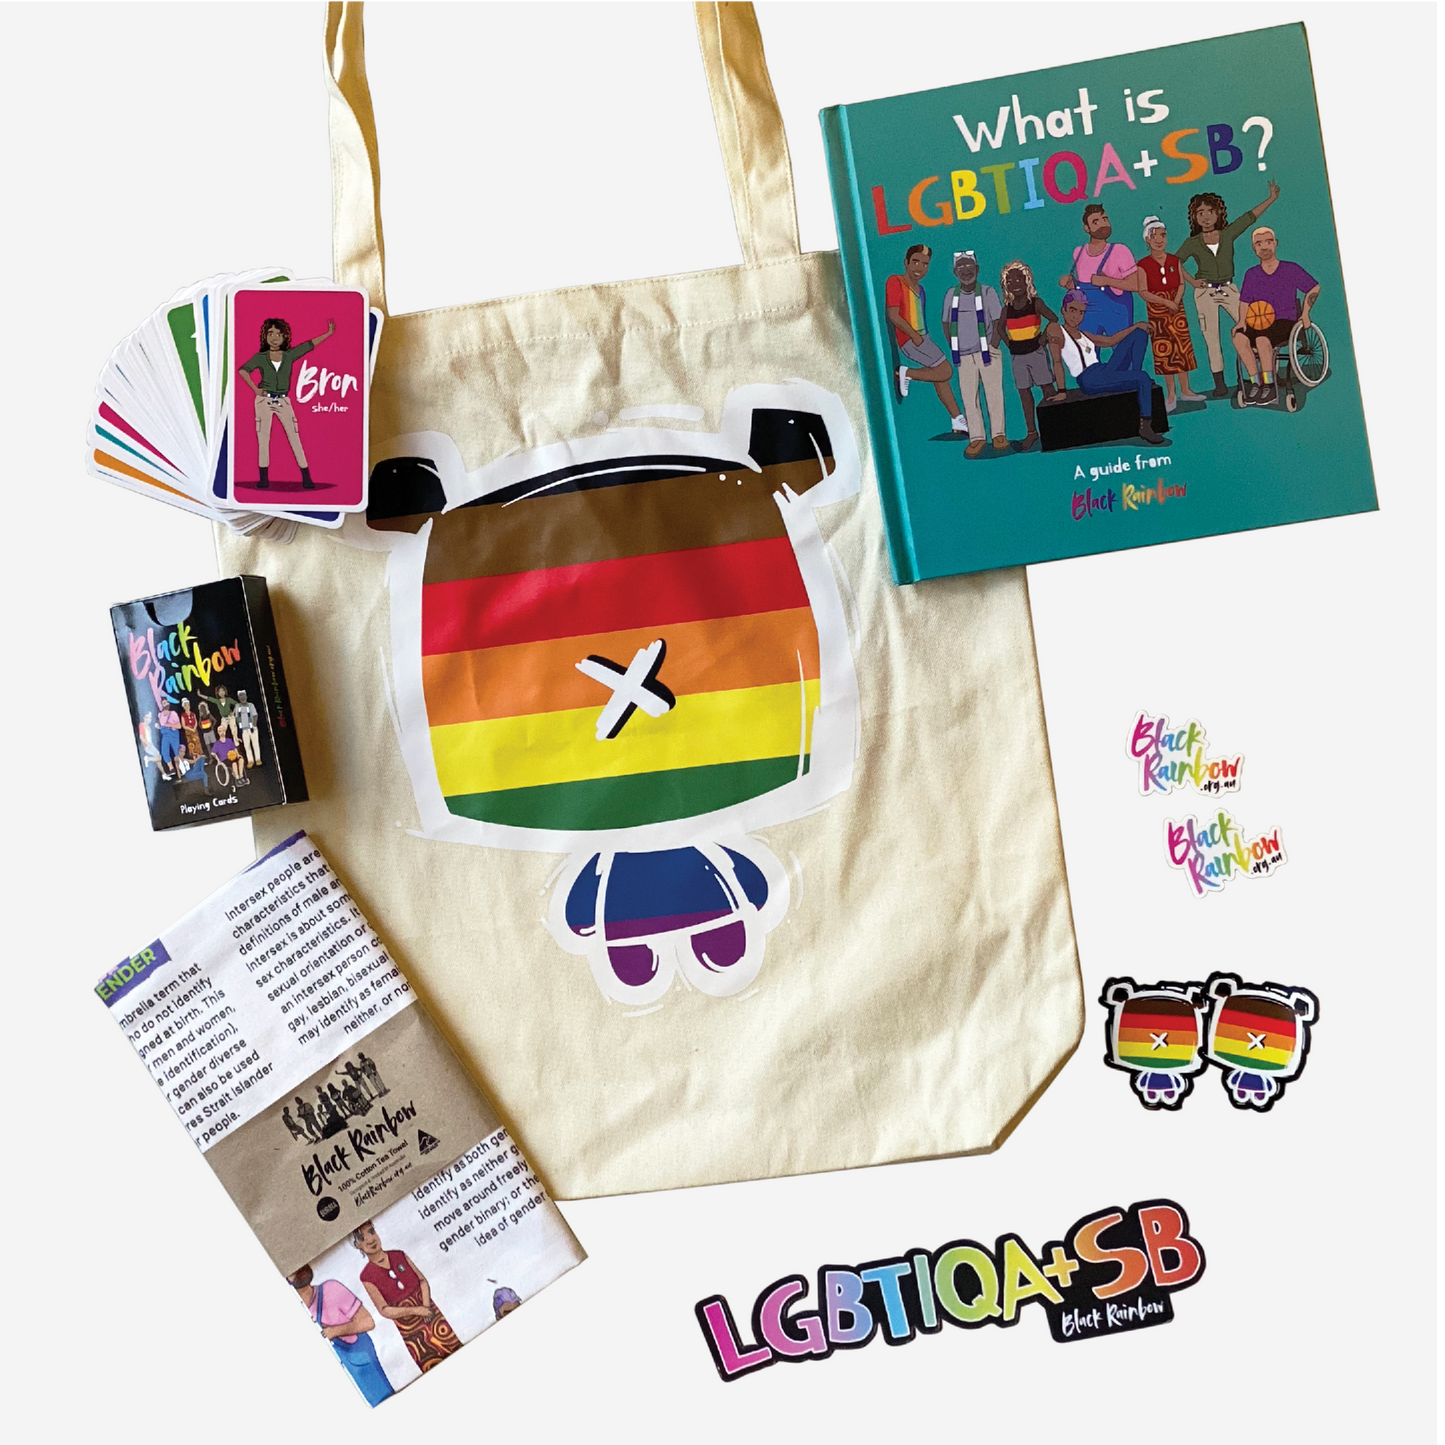 Black Rainbow's What is LGBTIQA+SB? Guidebook and White Tote Bundle - FREE Purple Tee!